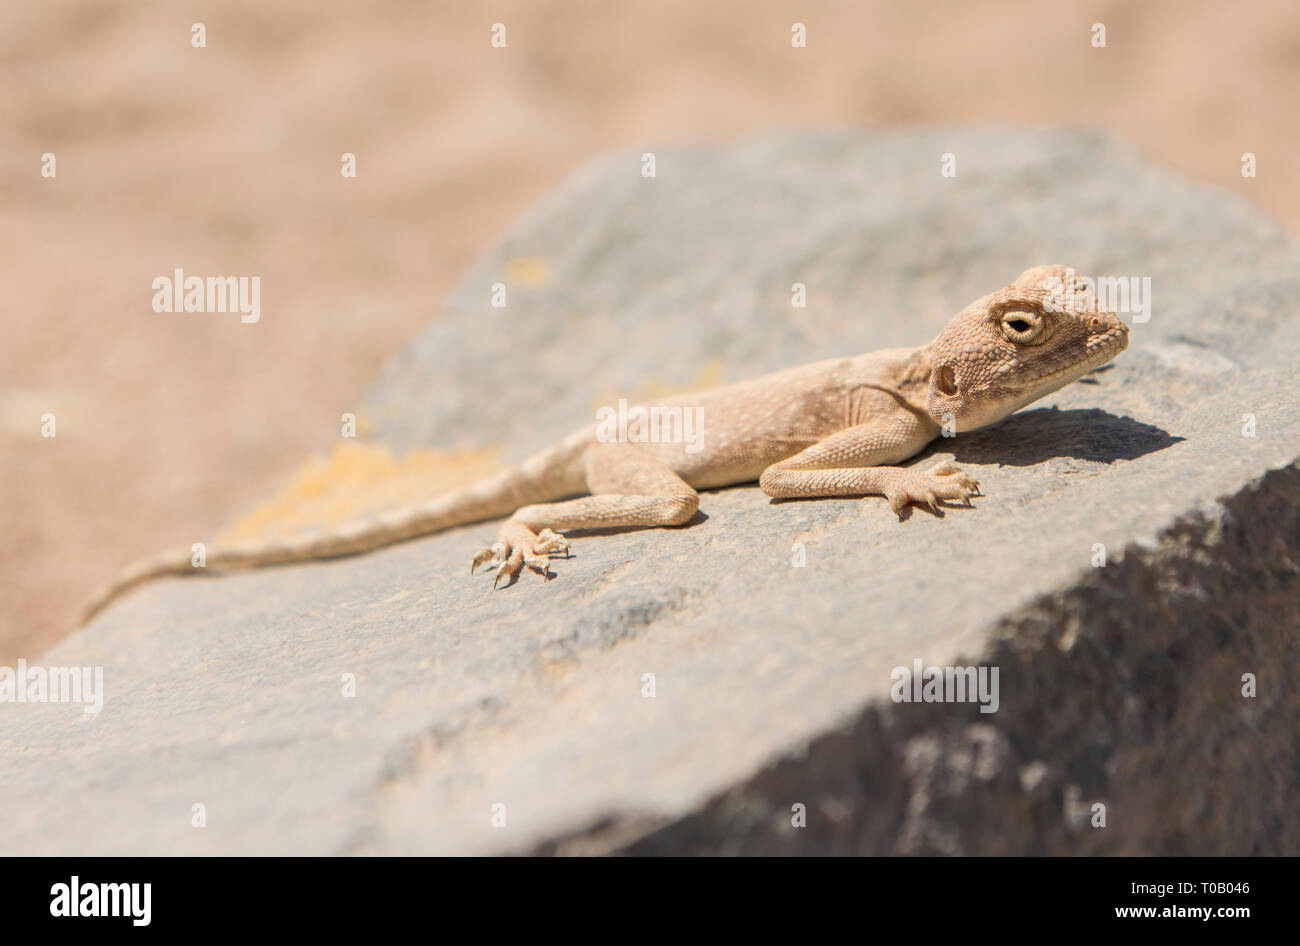 Closeup detail of egyptian desert agama lizard on a rock in harsh arid environment Stock Photo